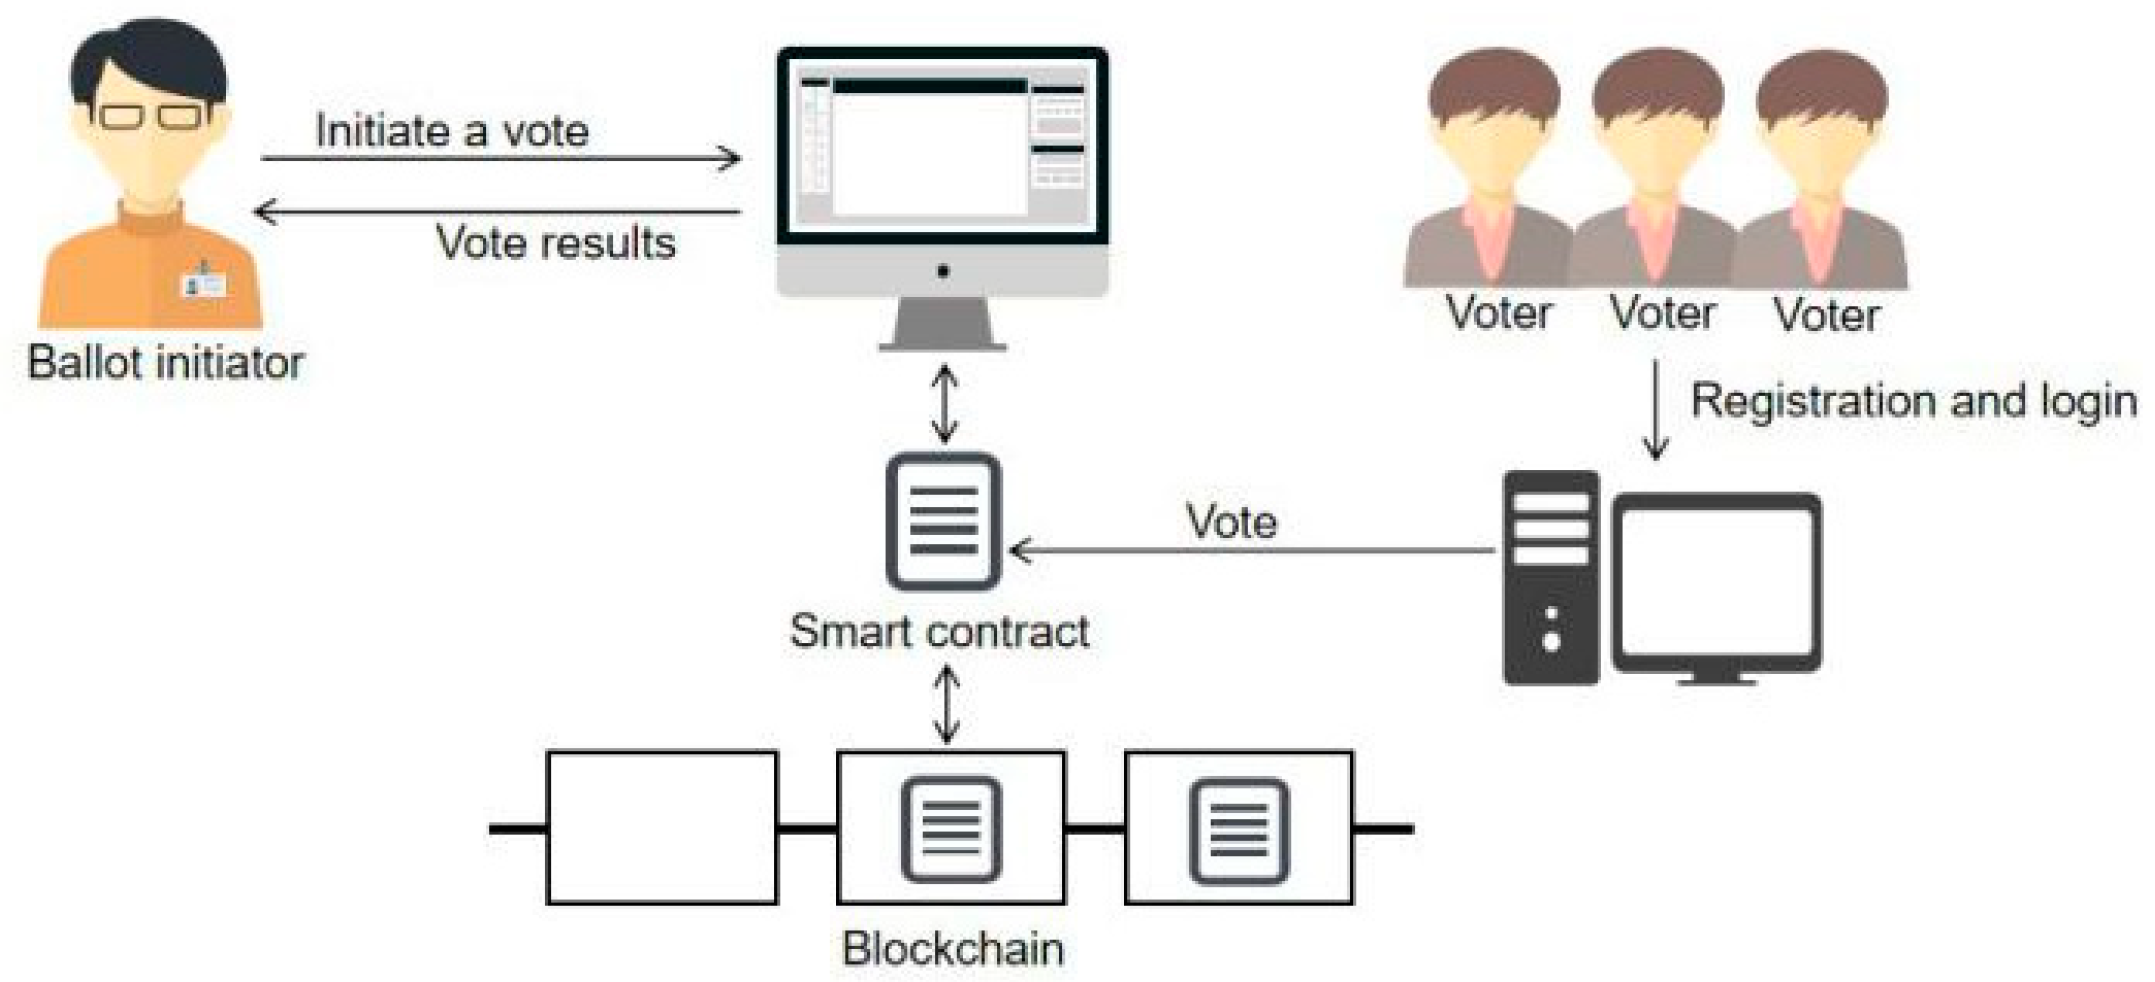 IPS-X | City of Zug Blockchain Voting Trial